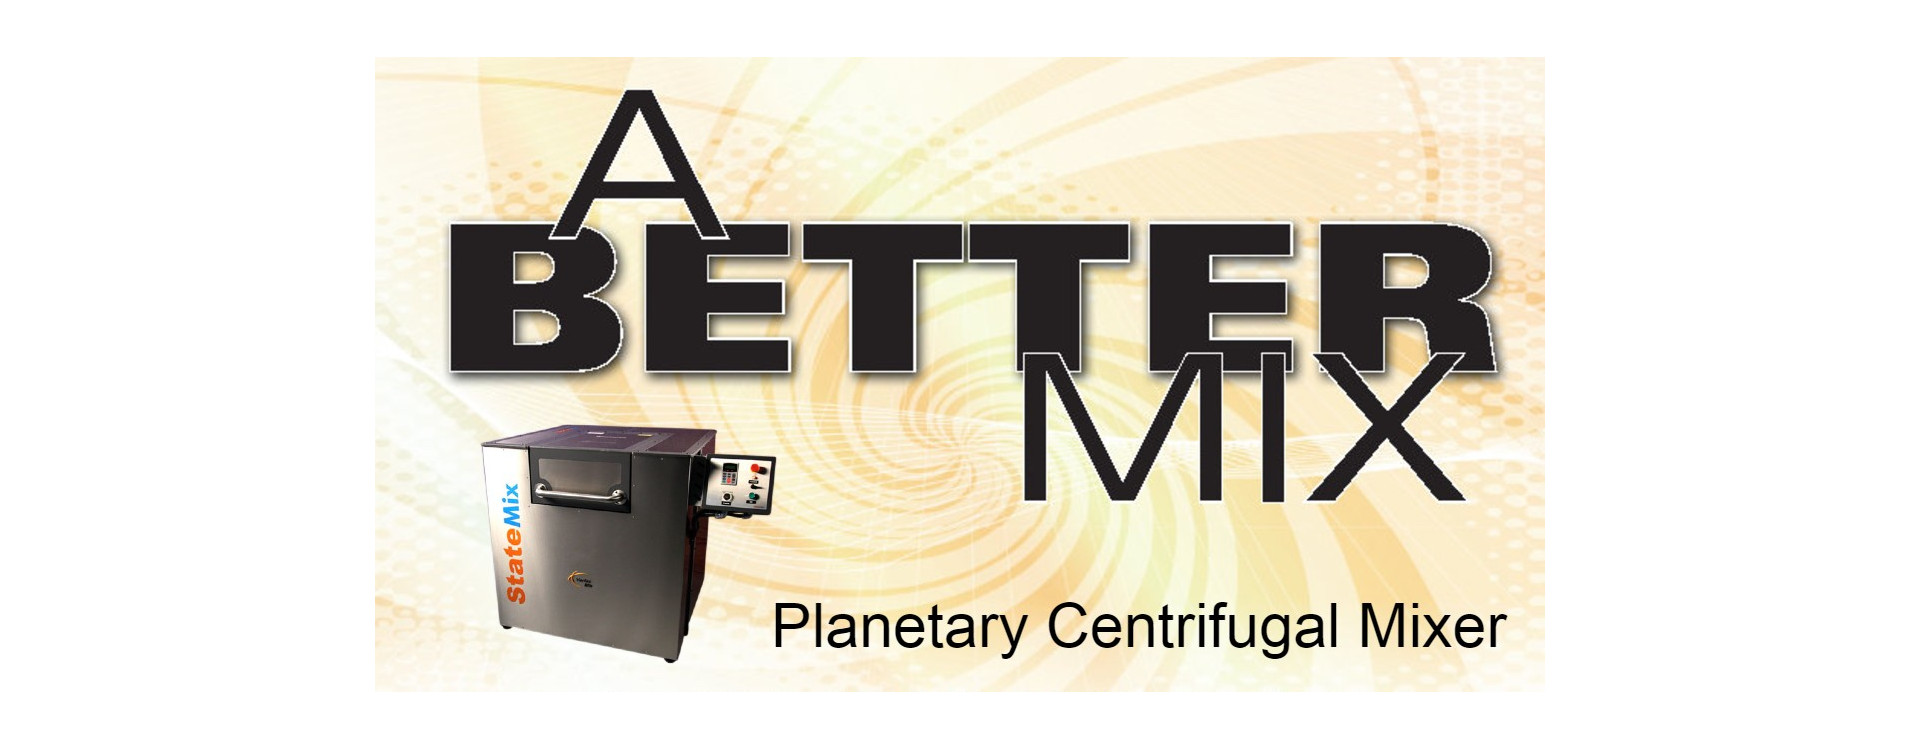 Dual-Axis Centrifugal Mixer - A Better Mix